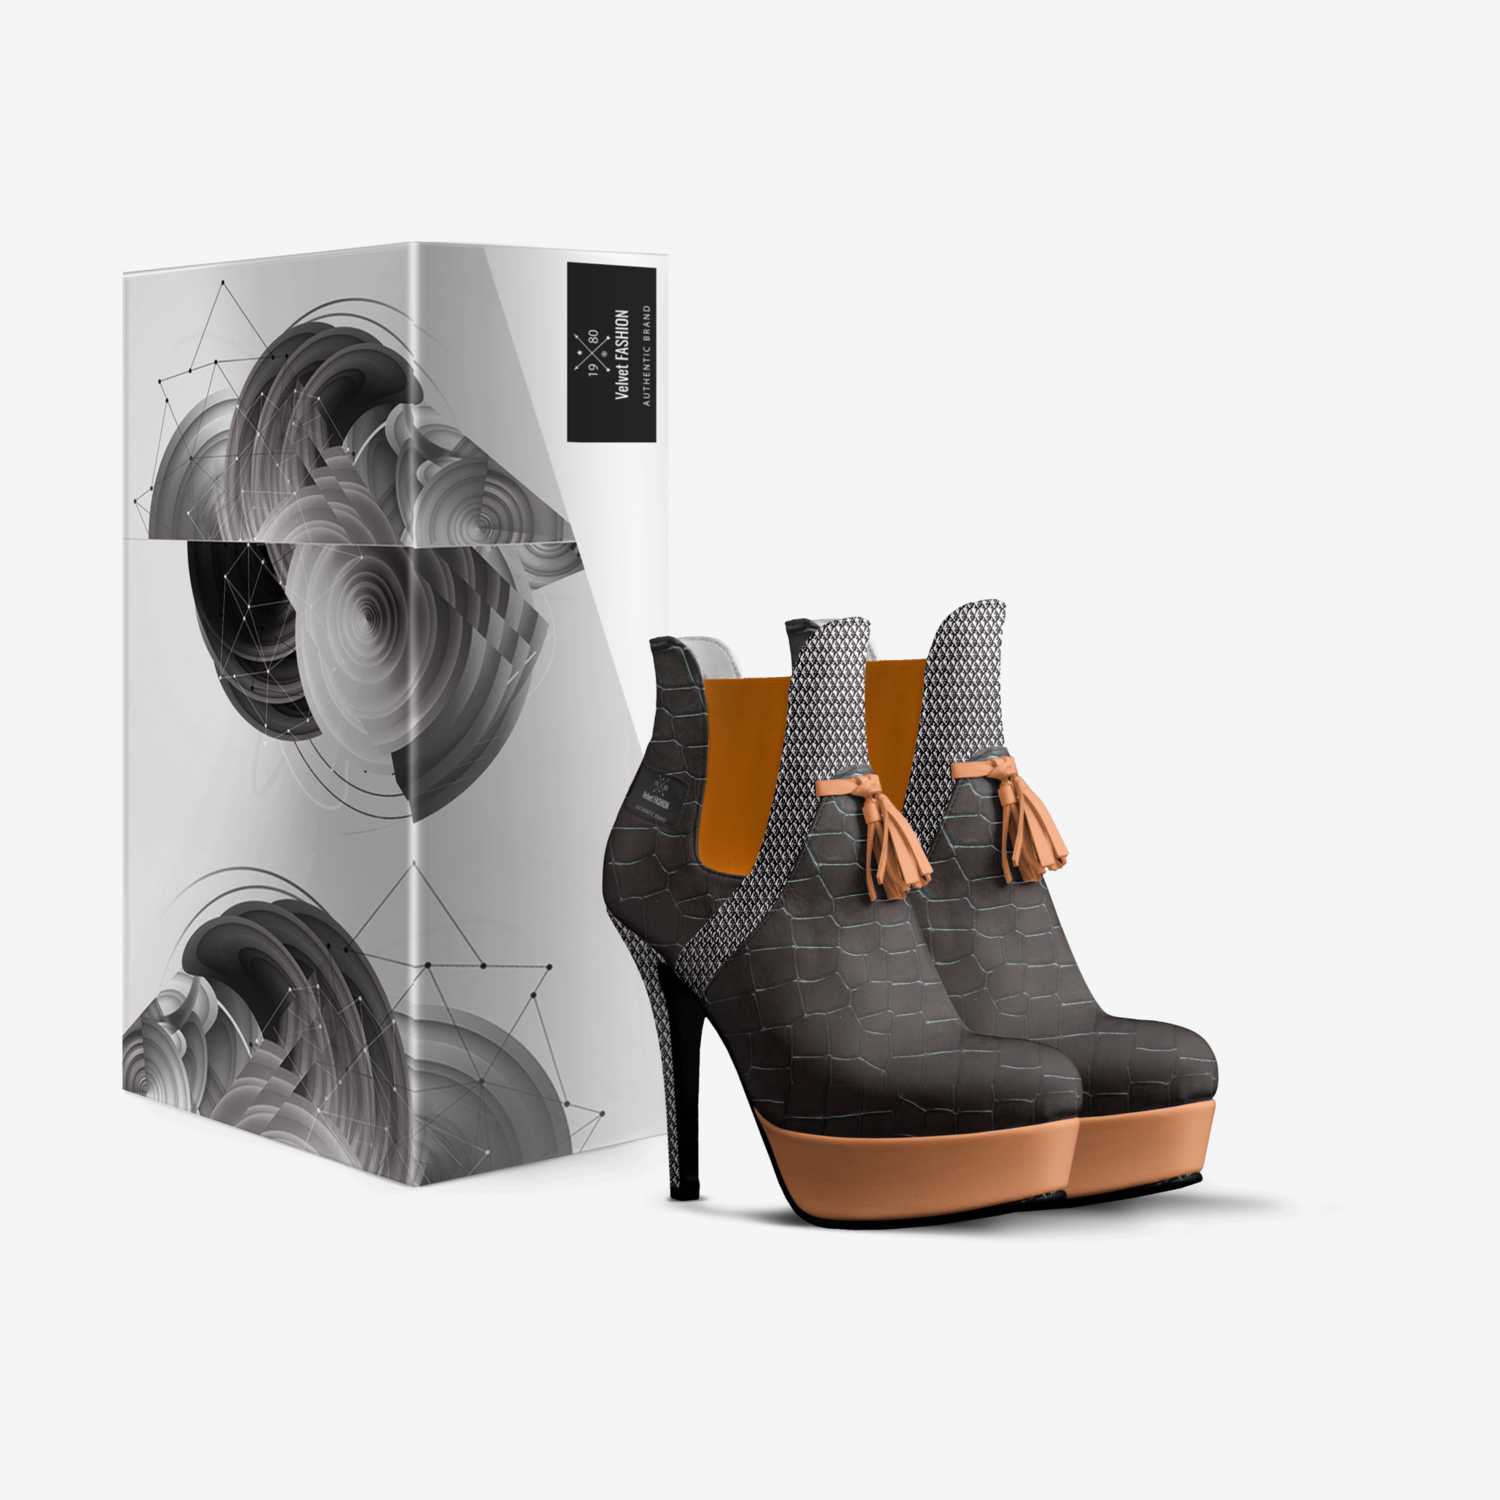 Velvet FASHION custom made in Italy shoes by Shantae Esannason | Box view